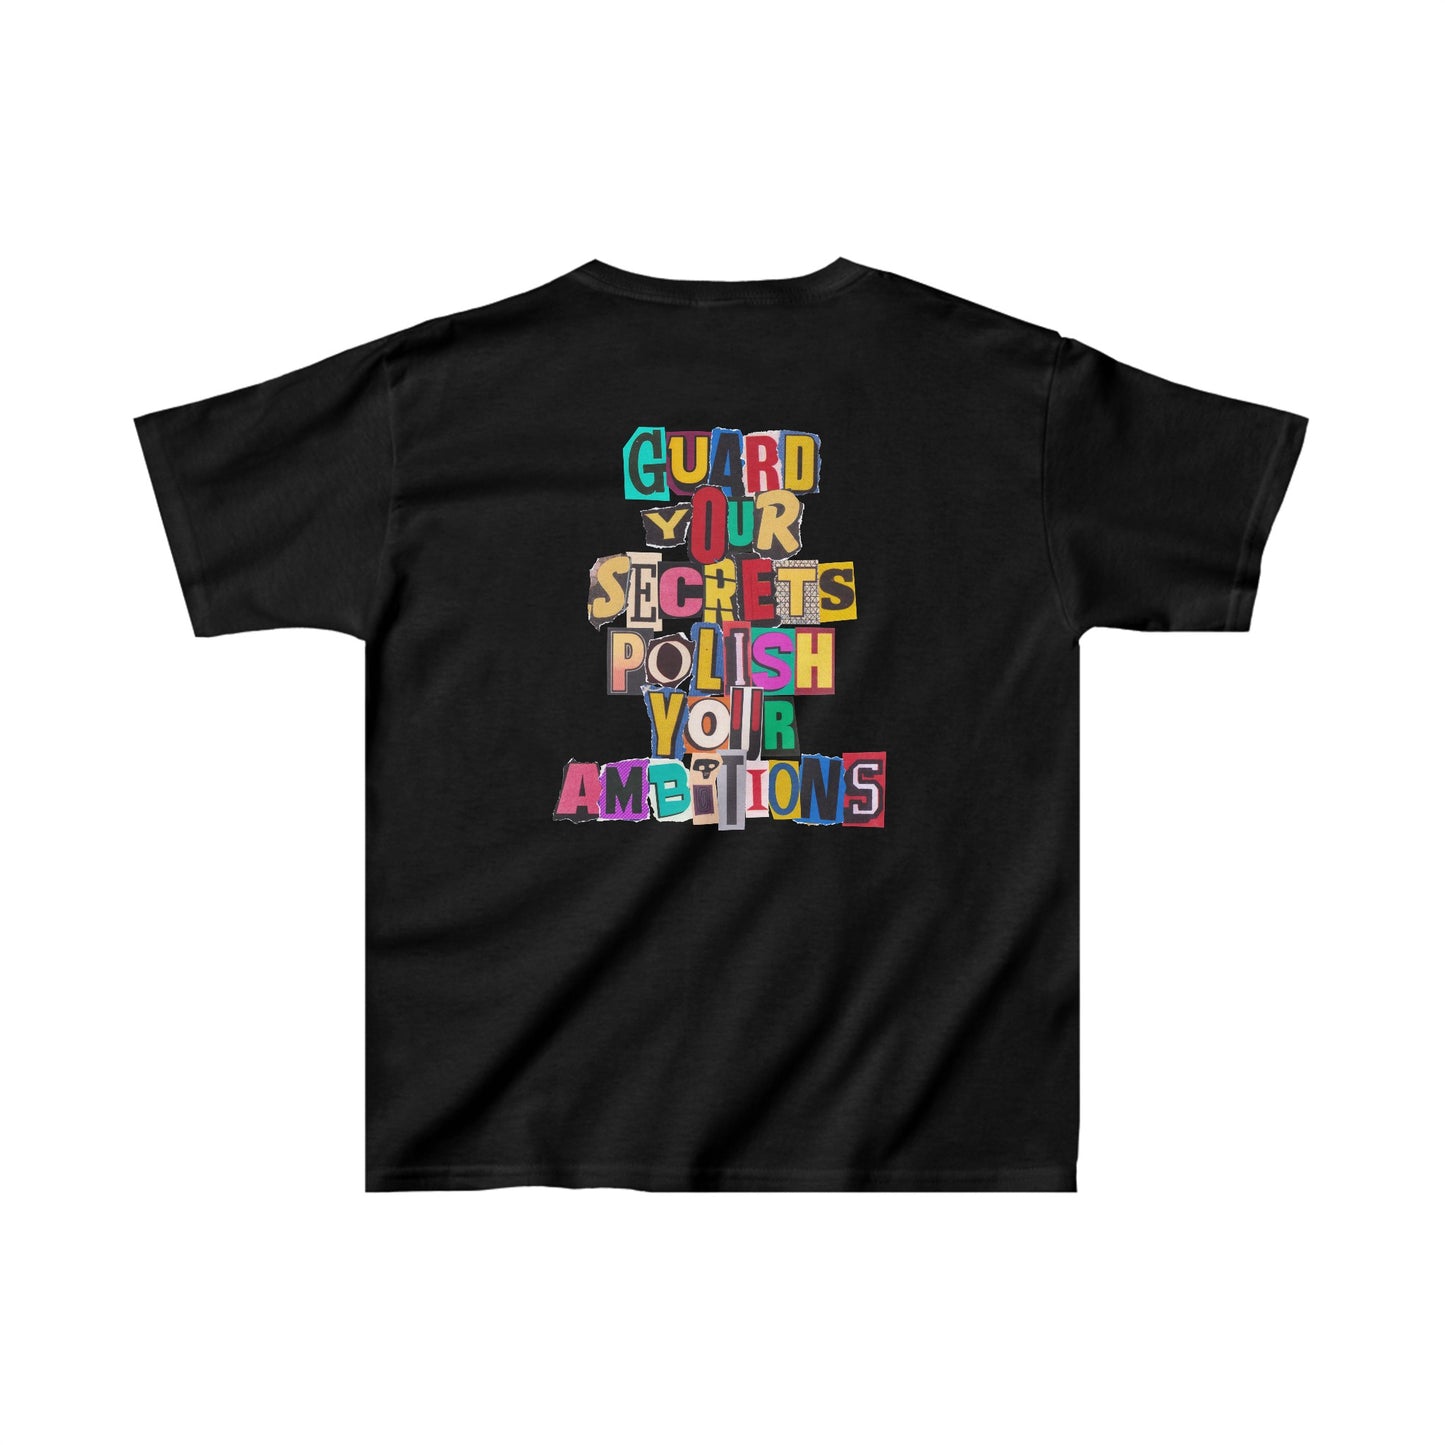 Youth WIY x Lattimore Vintage T-Shirt